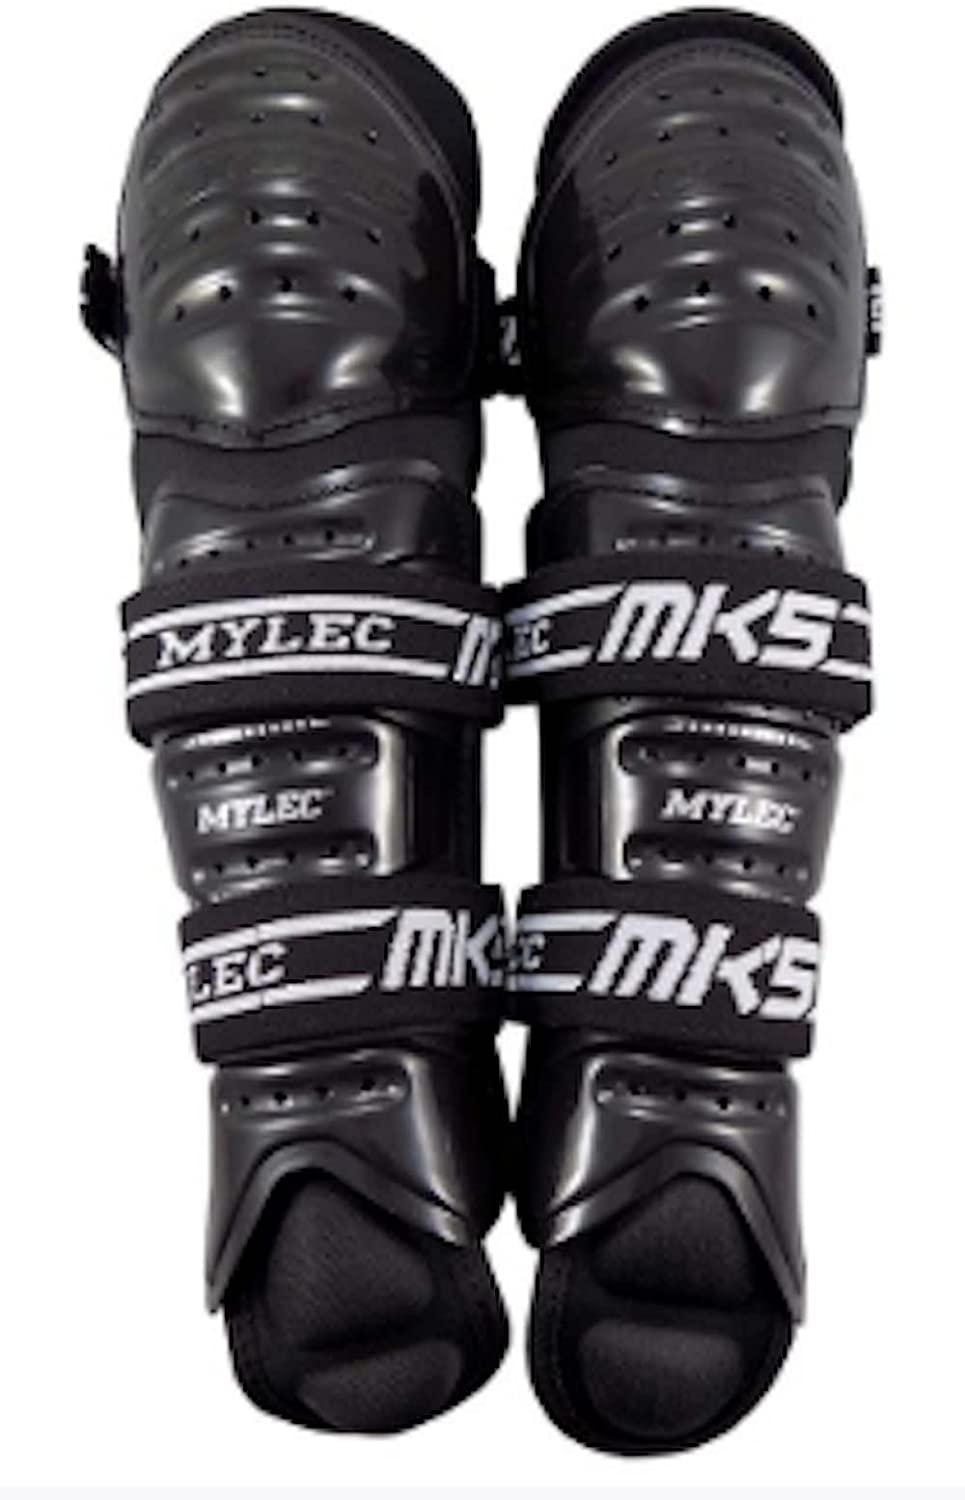 Mylec MK5 15" Pro Roller Hockey, Dek Hockey, Street Hockey Shinguards/Kneepads - Pro-Distributing